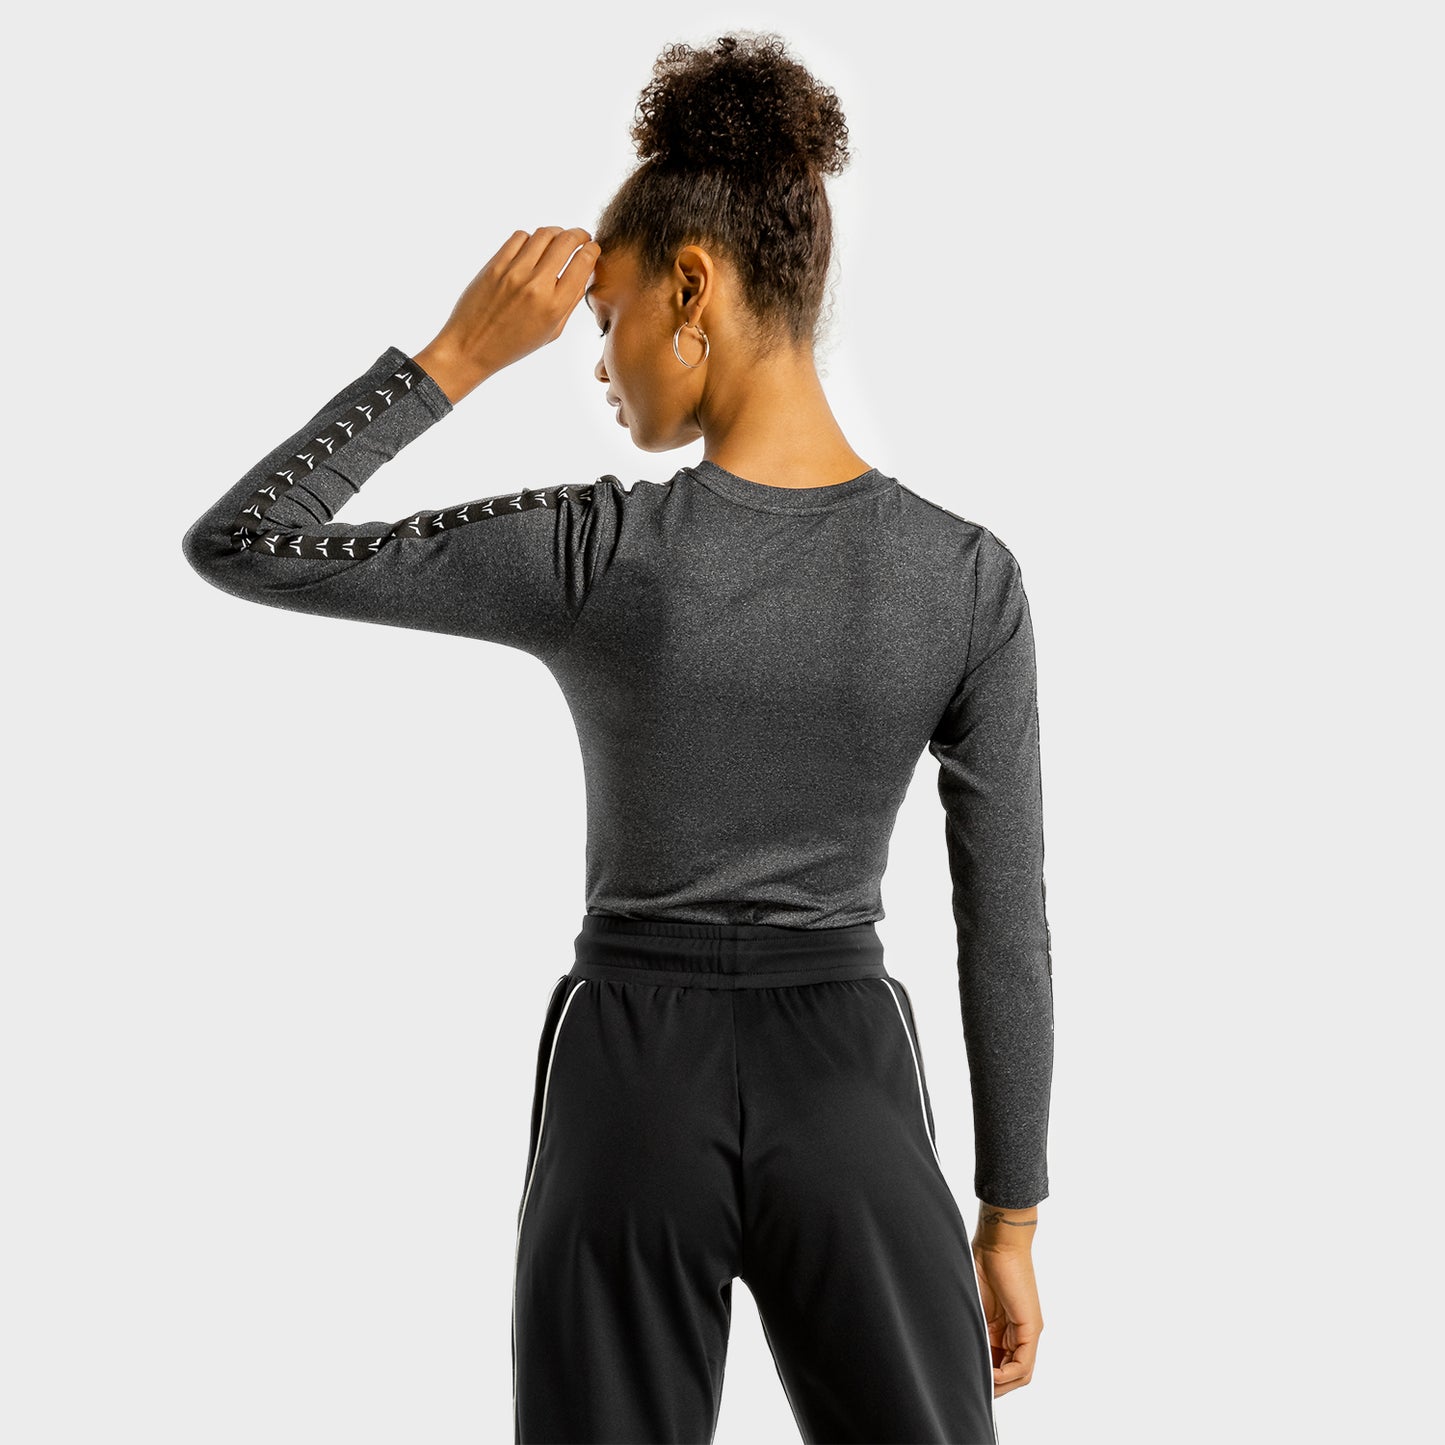 squatwolf-bodysuit-for-women-bodysuit-black-gym-workout-noor